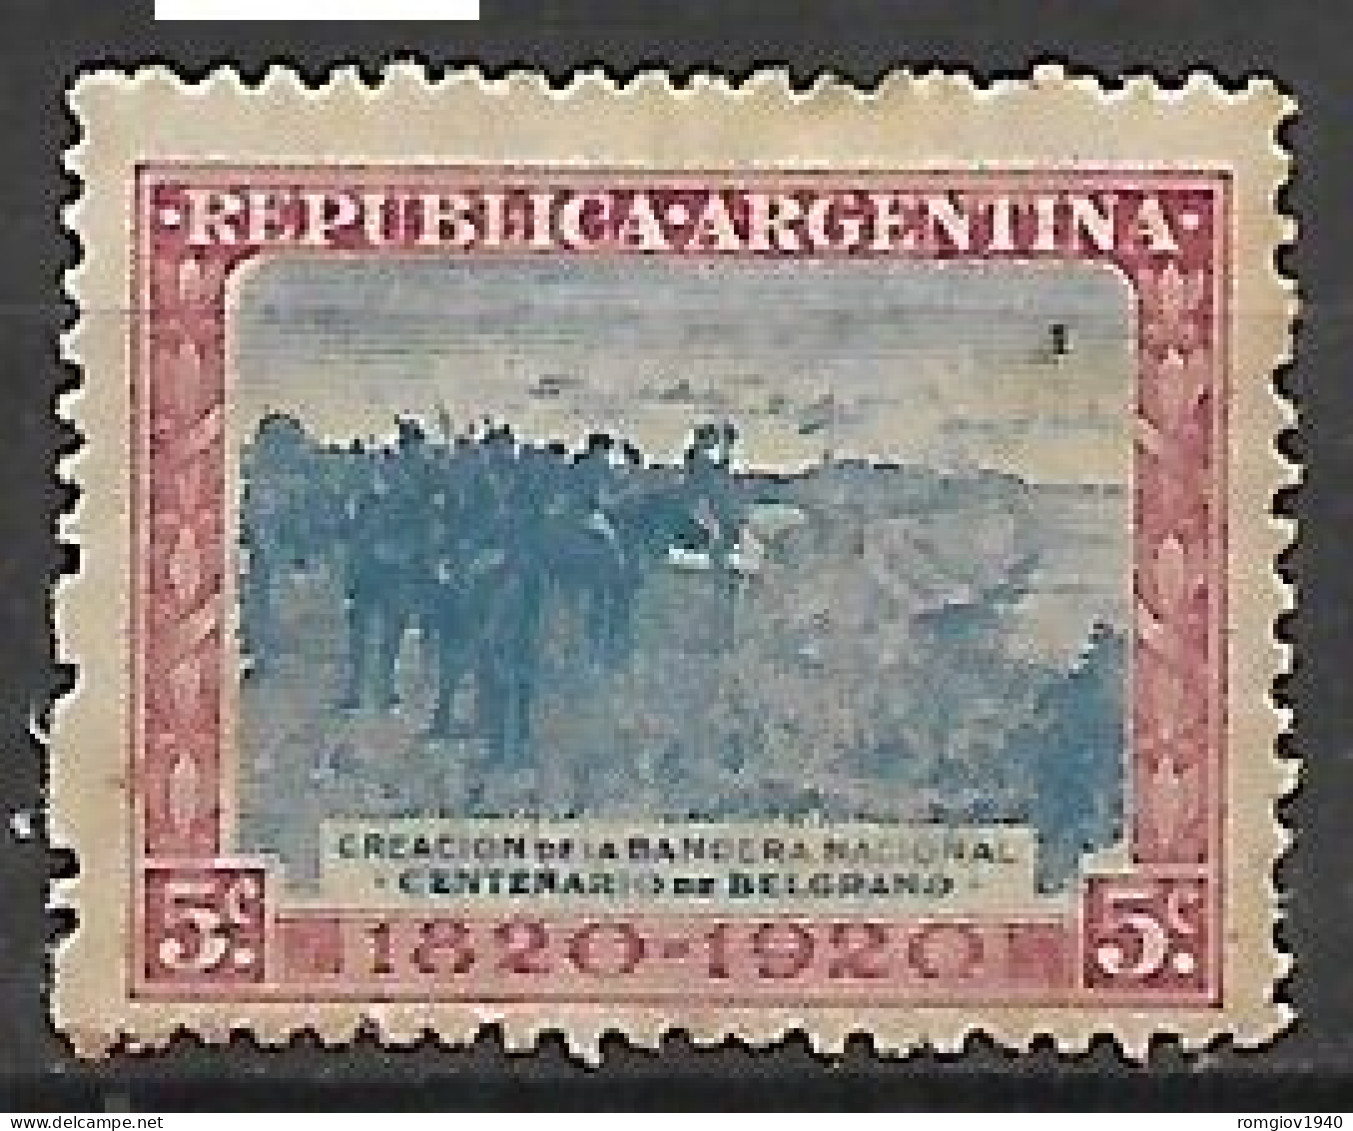 ARGENTINA  1920  CENTENARIO DELLA  MORTE DEL GENERALE MANUEL BELGRANO  YVERT. 253 MLH VF - Nuovi